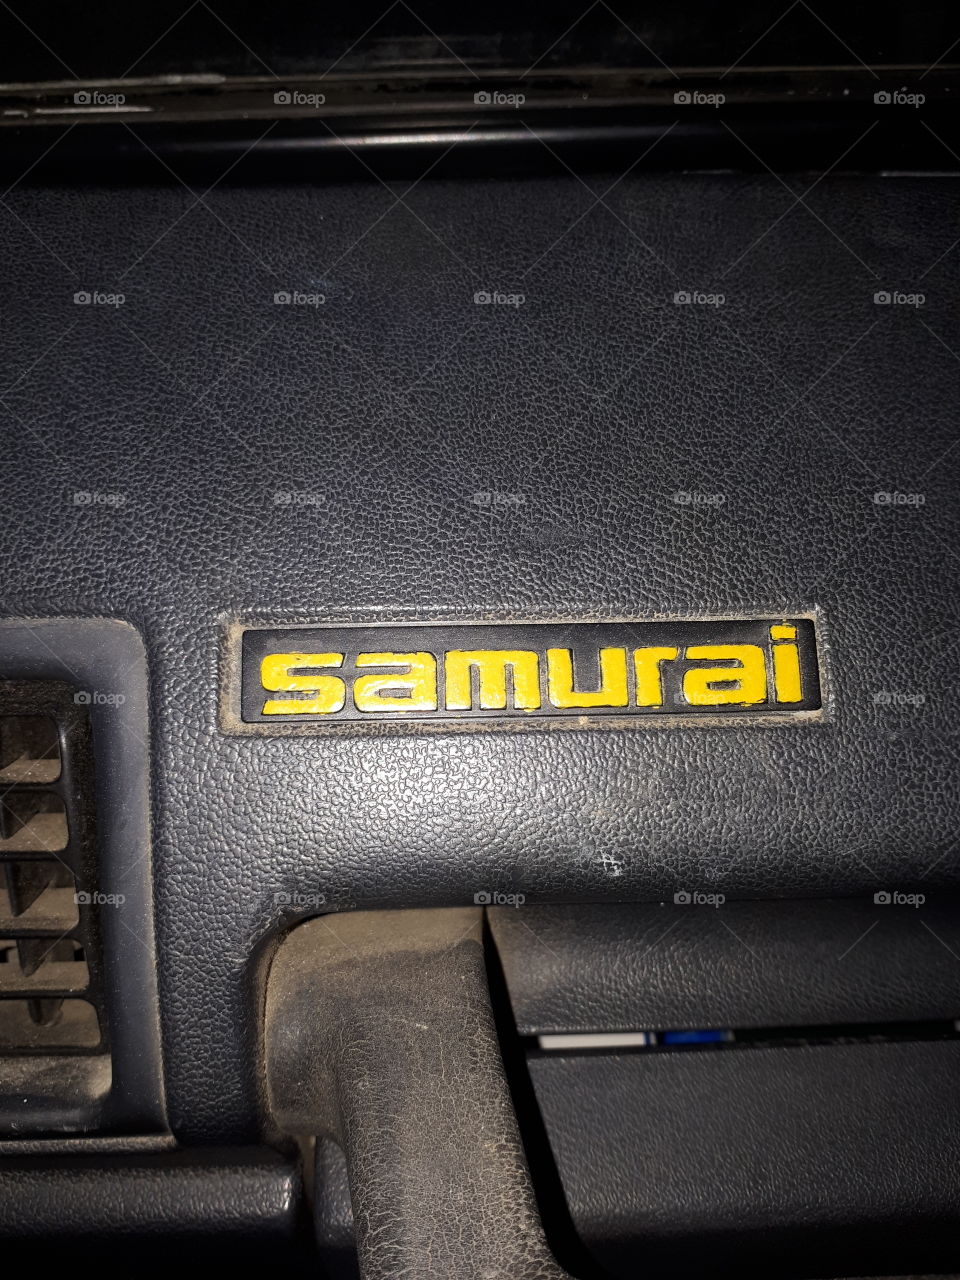 Suzuki samurai